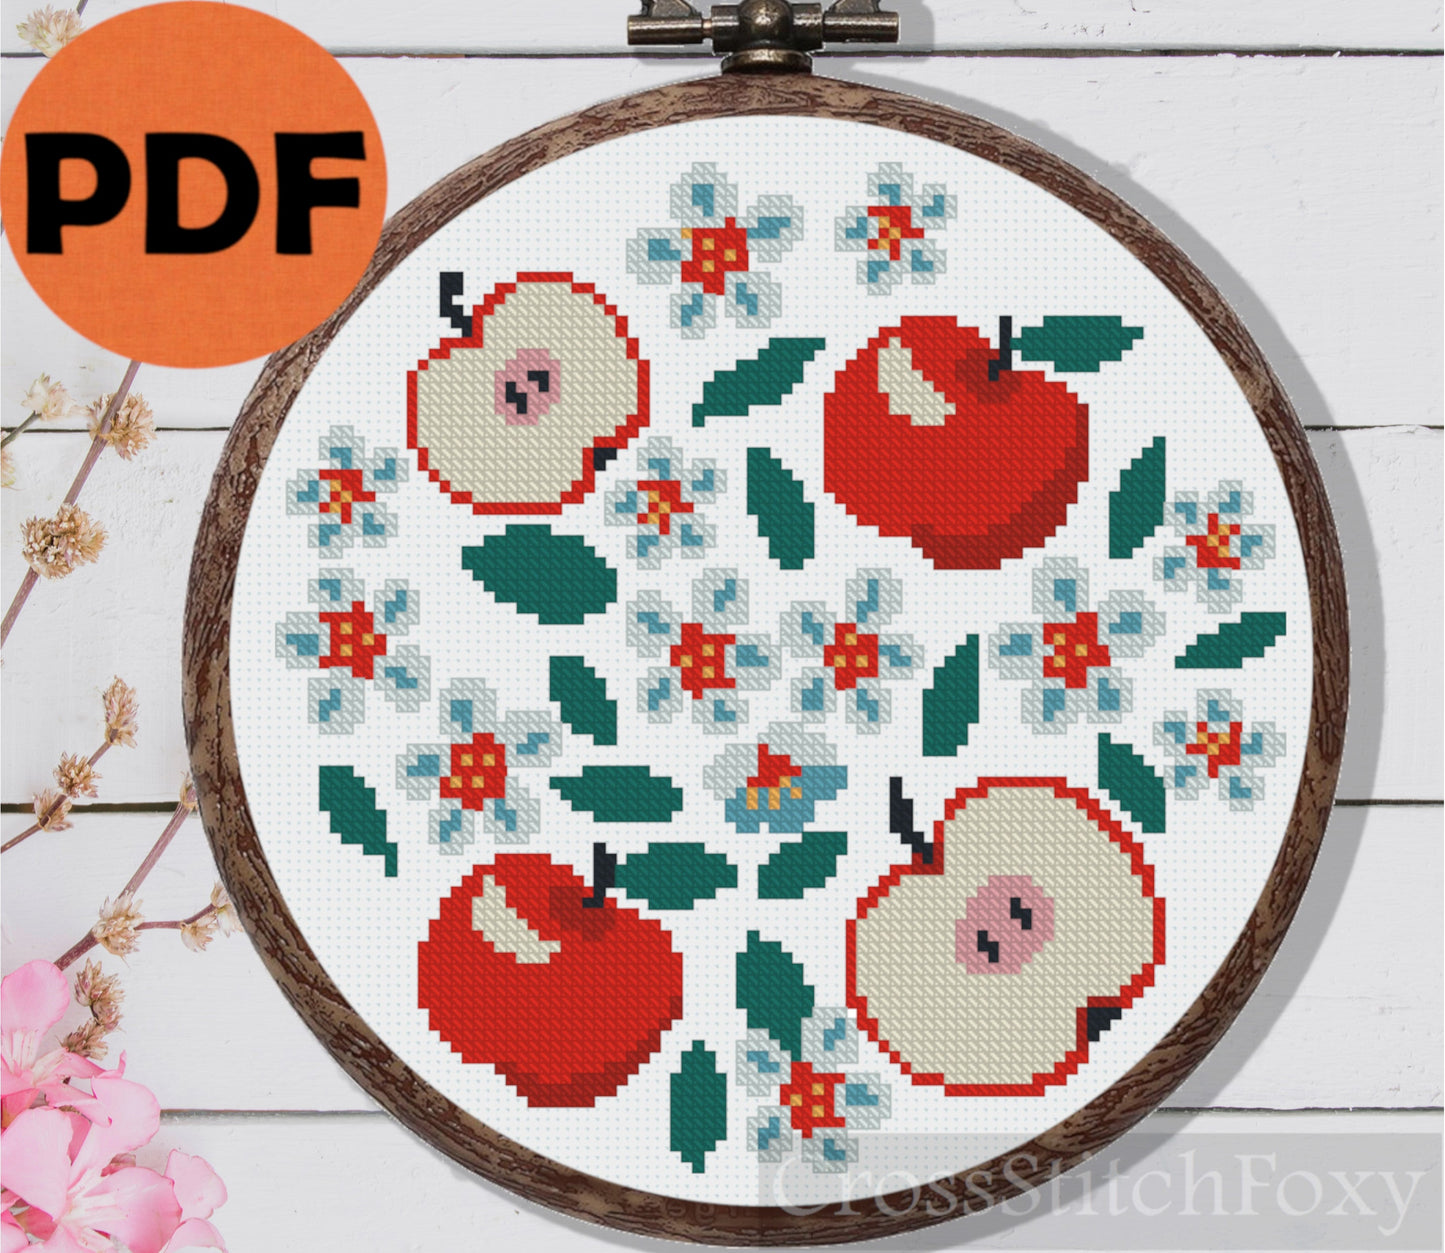 Red Apples Flowers Cross Stitch Pattern PDF